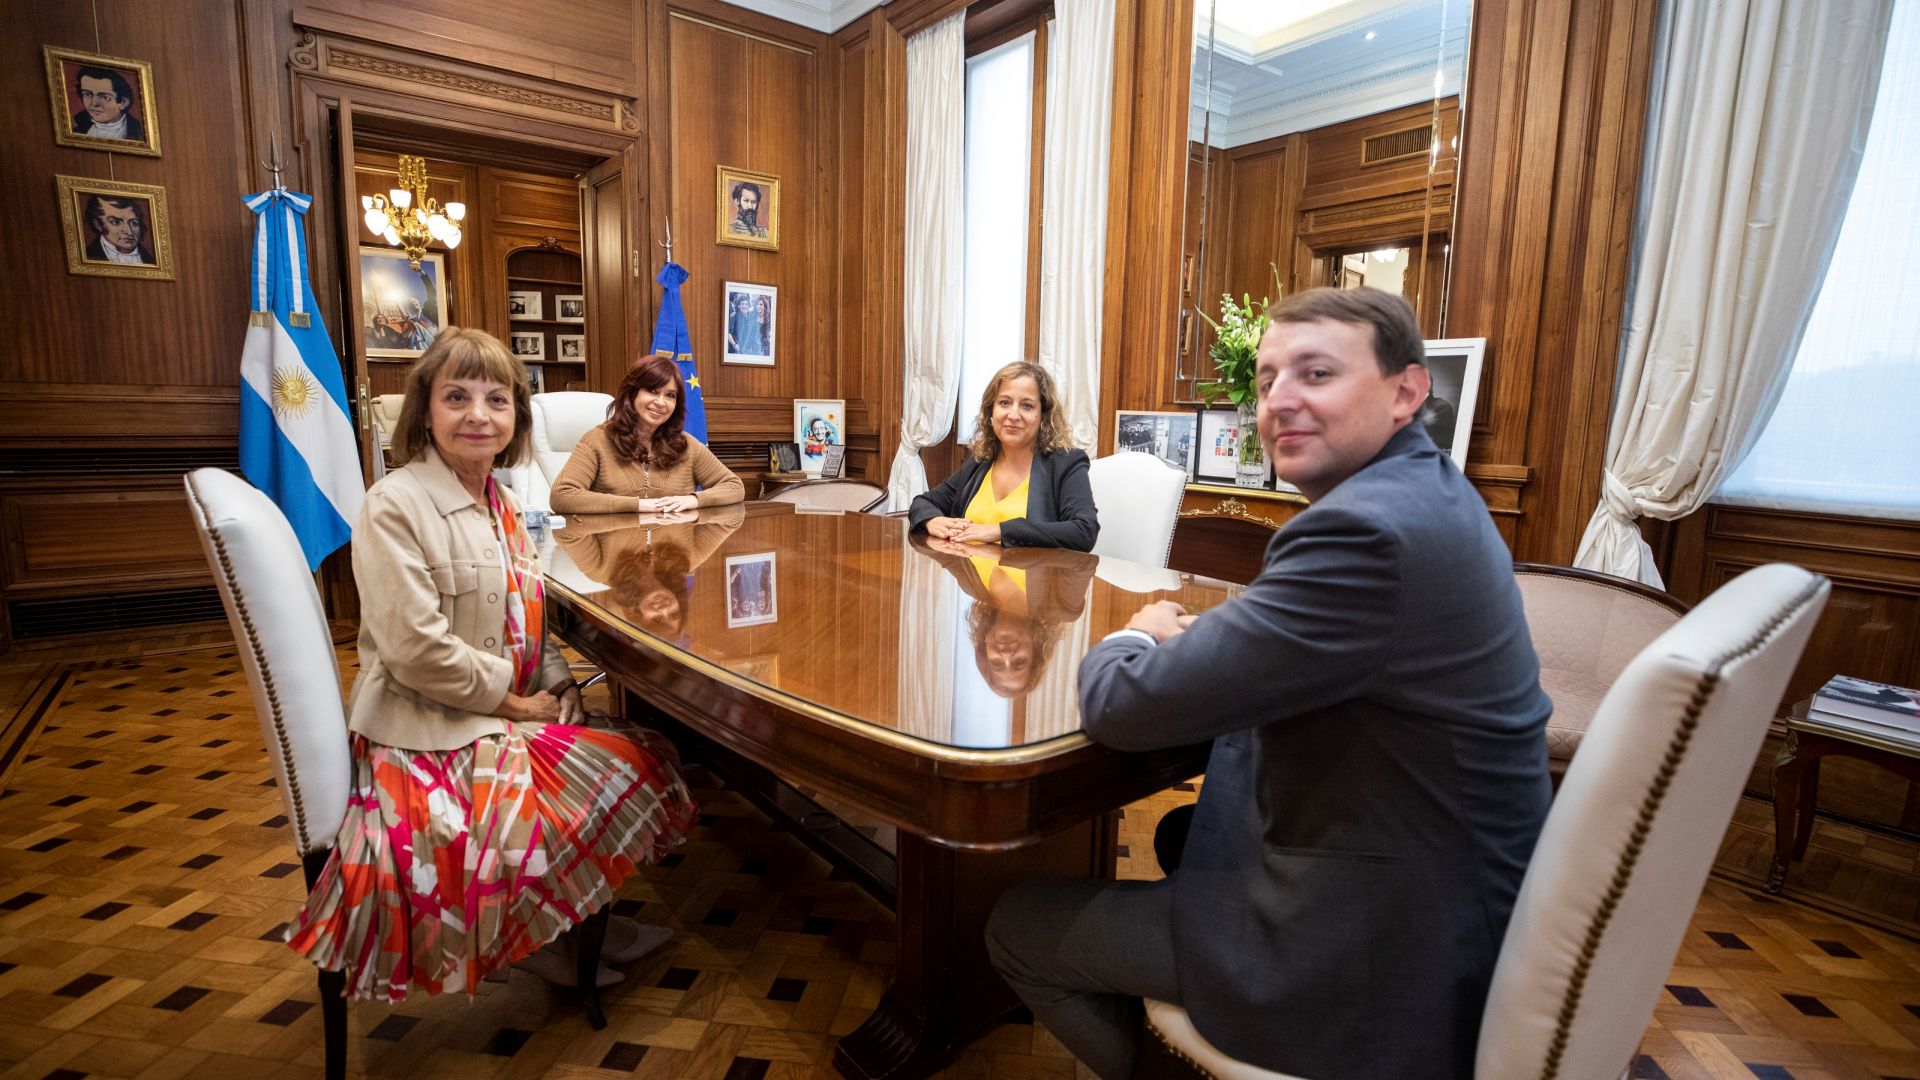 Iratxe meets Cristina Fernandez Kirchner in Argentina 